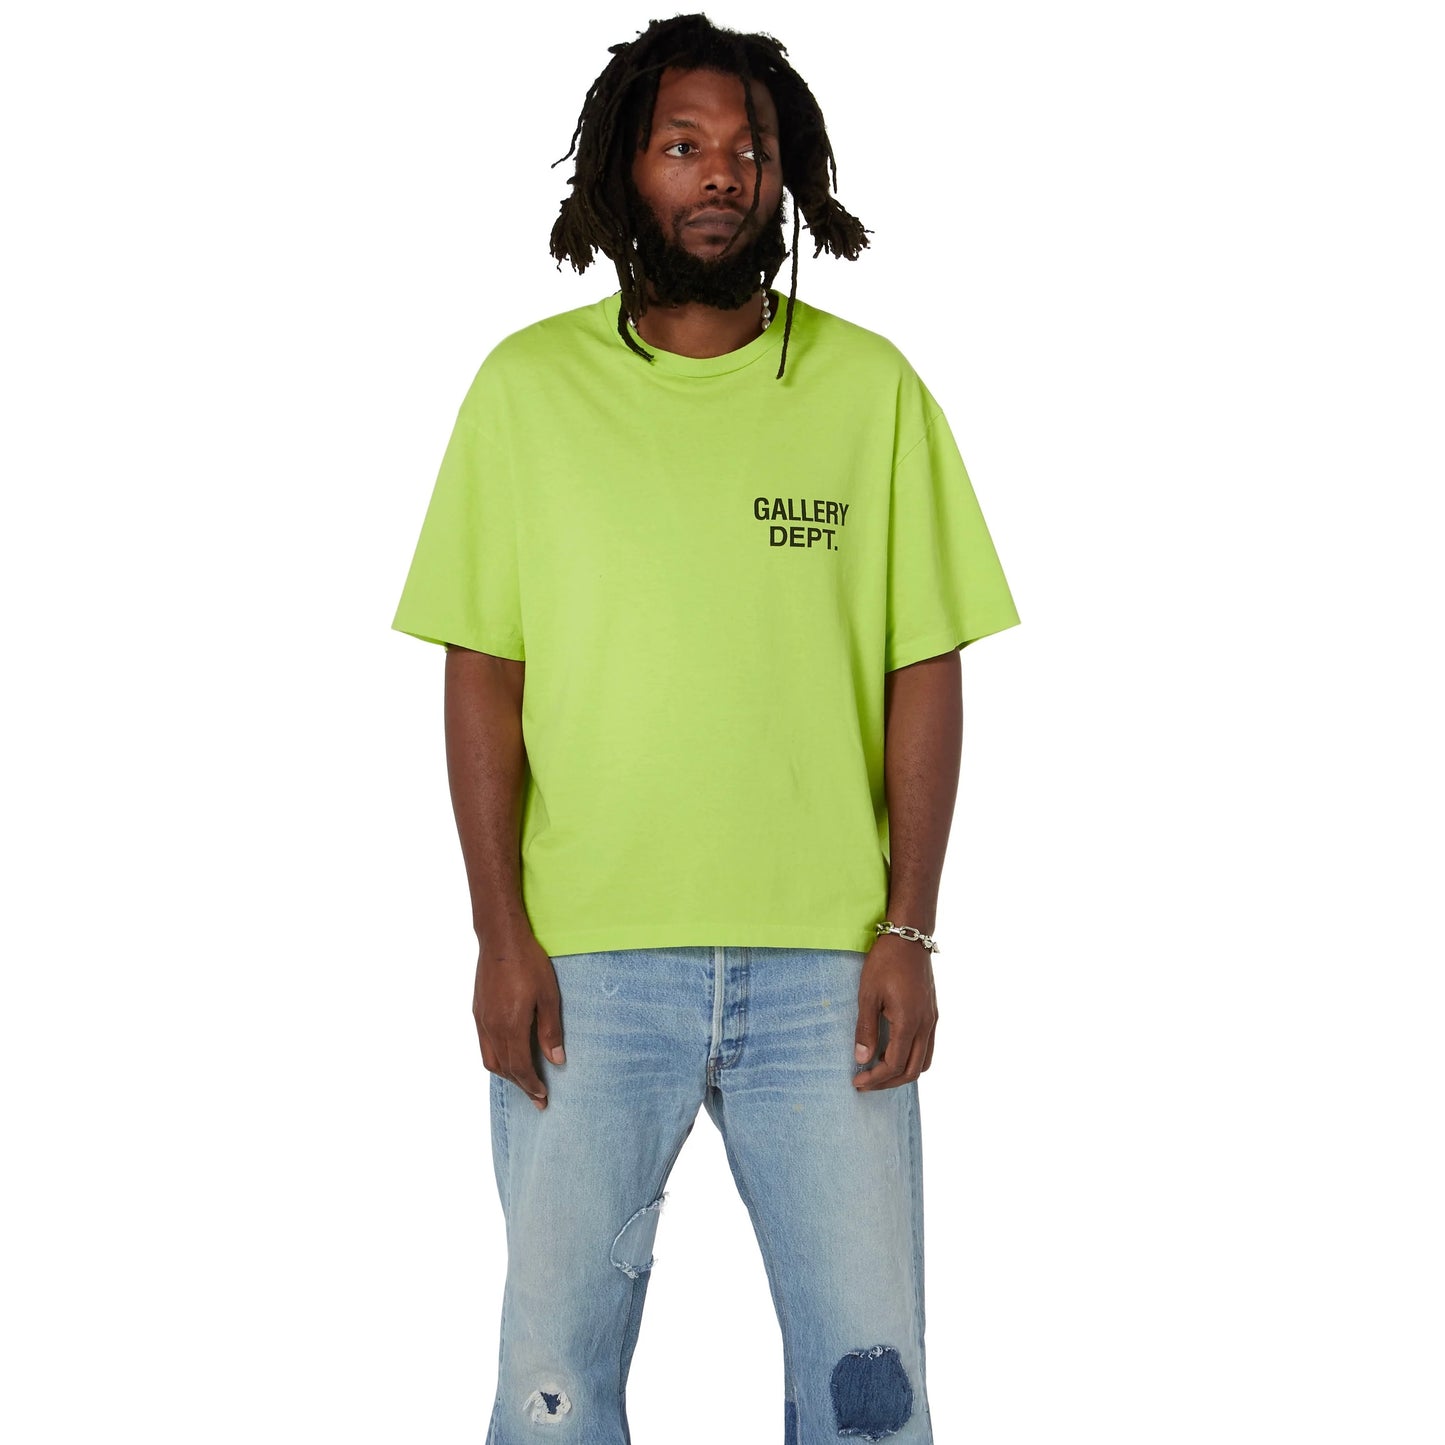 Gallery Dept Lime Green Souvenir T-Shirt On Body View 4